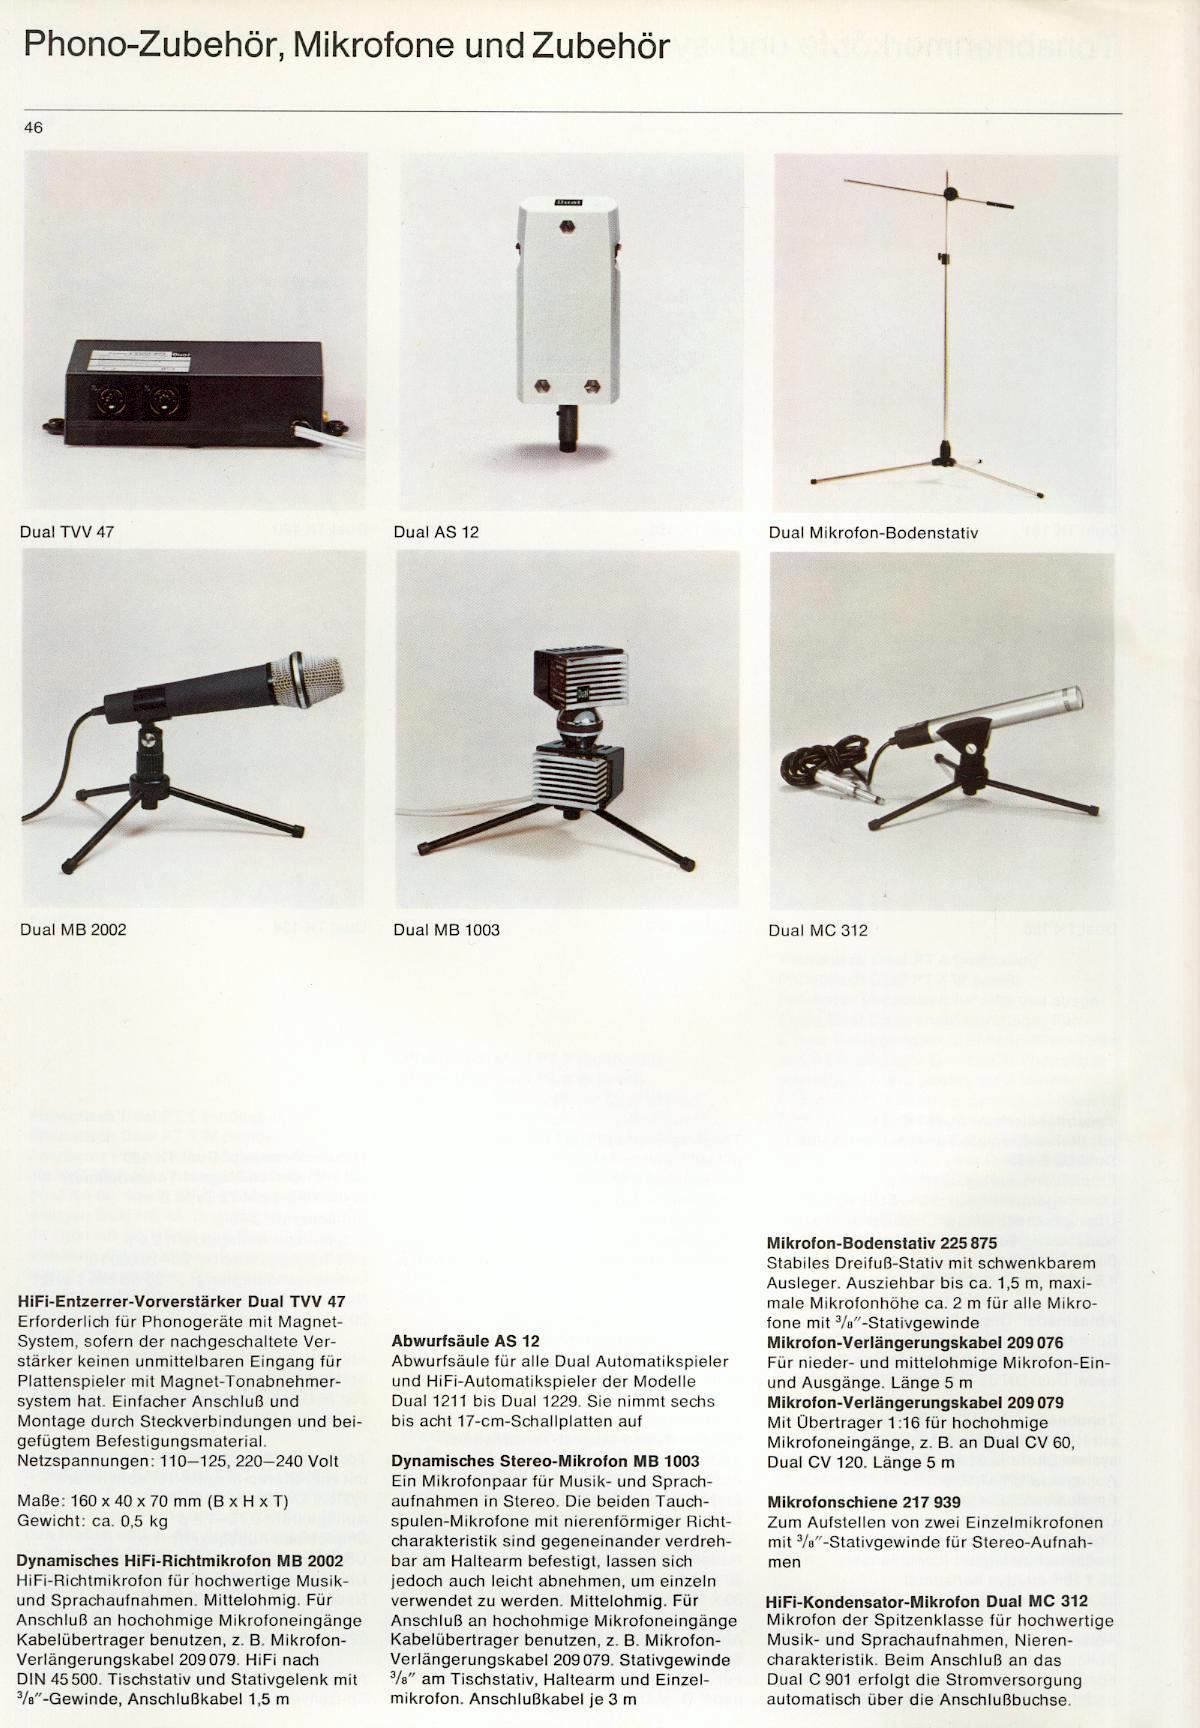 Dual MC-312-Prospekt-1973.jpg